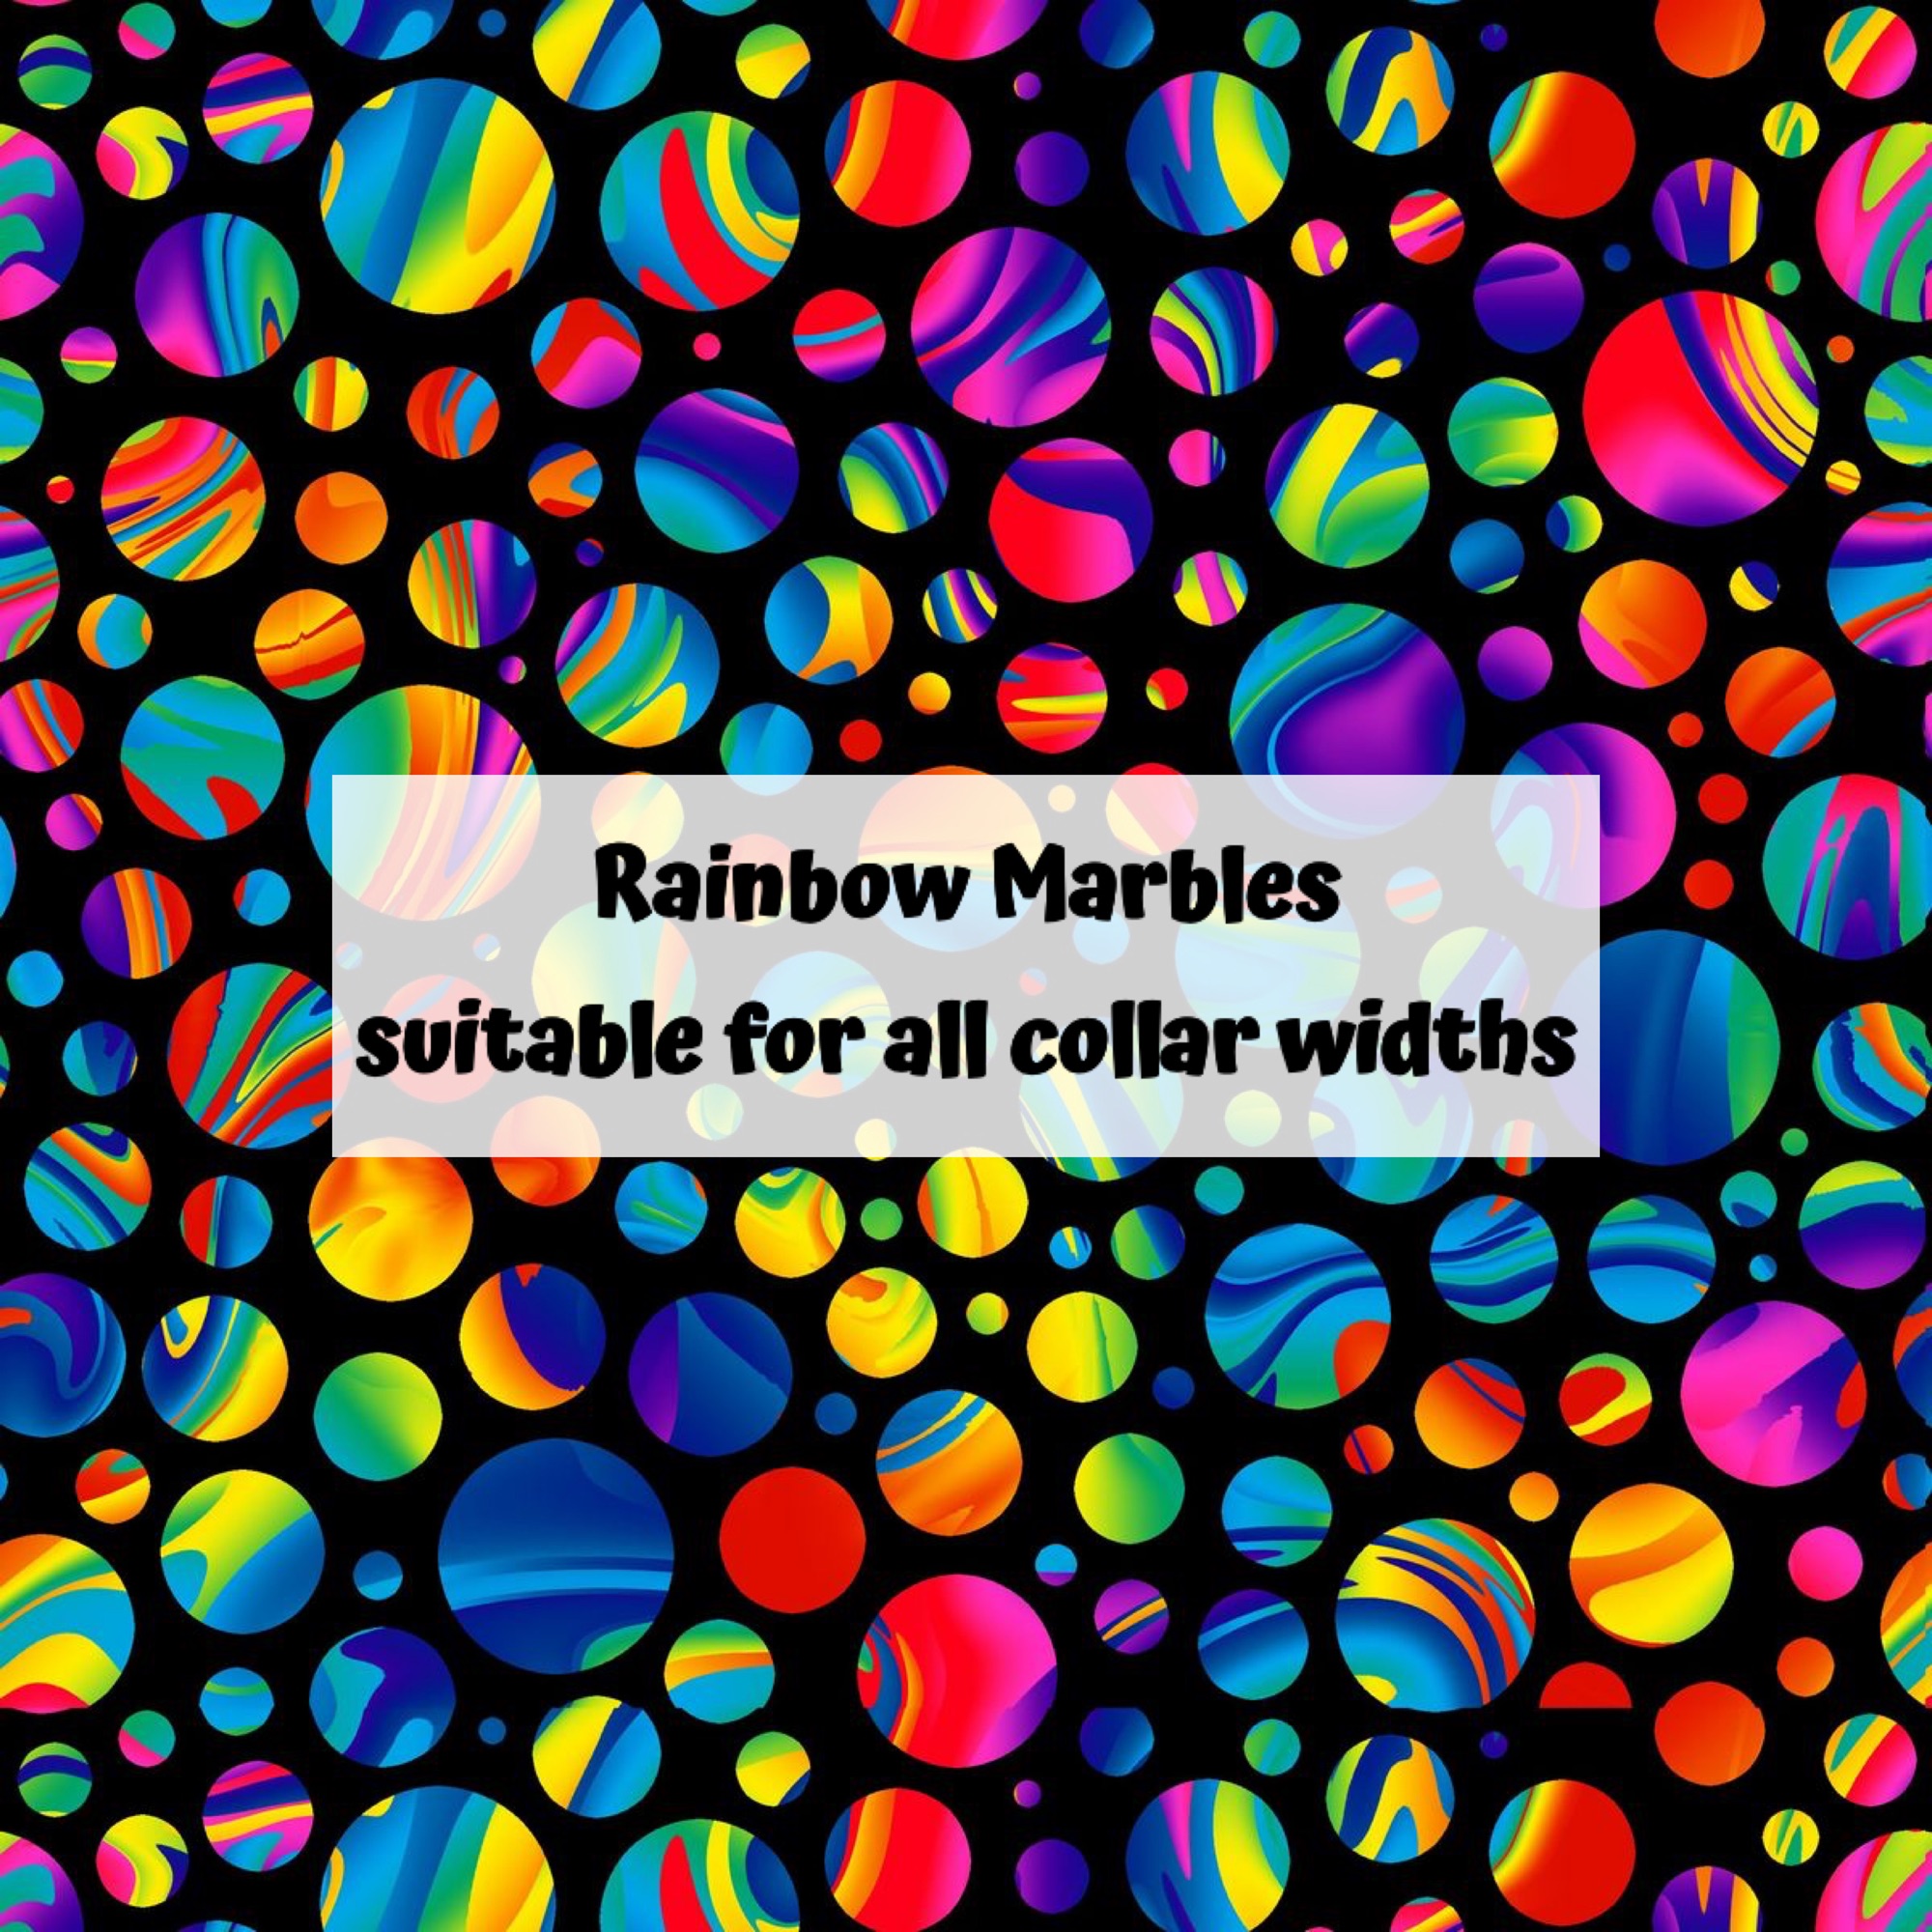 Rainbow Marbles